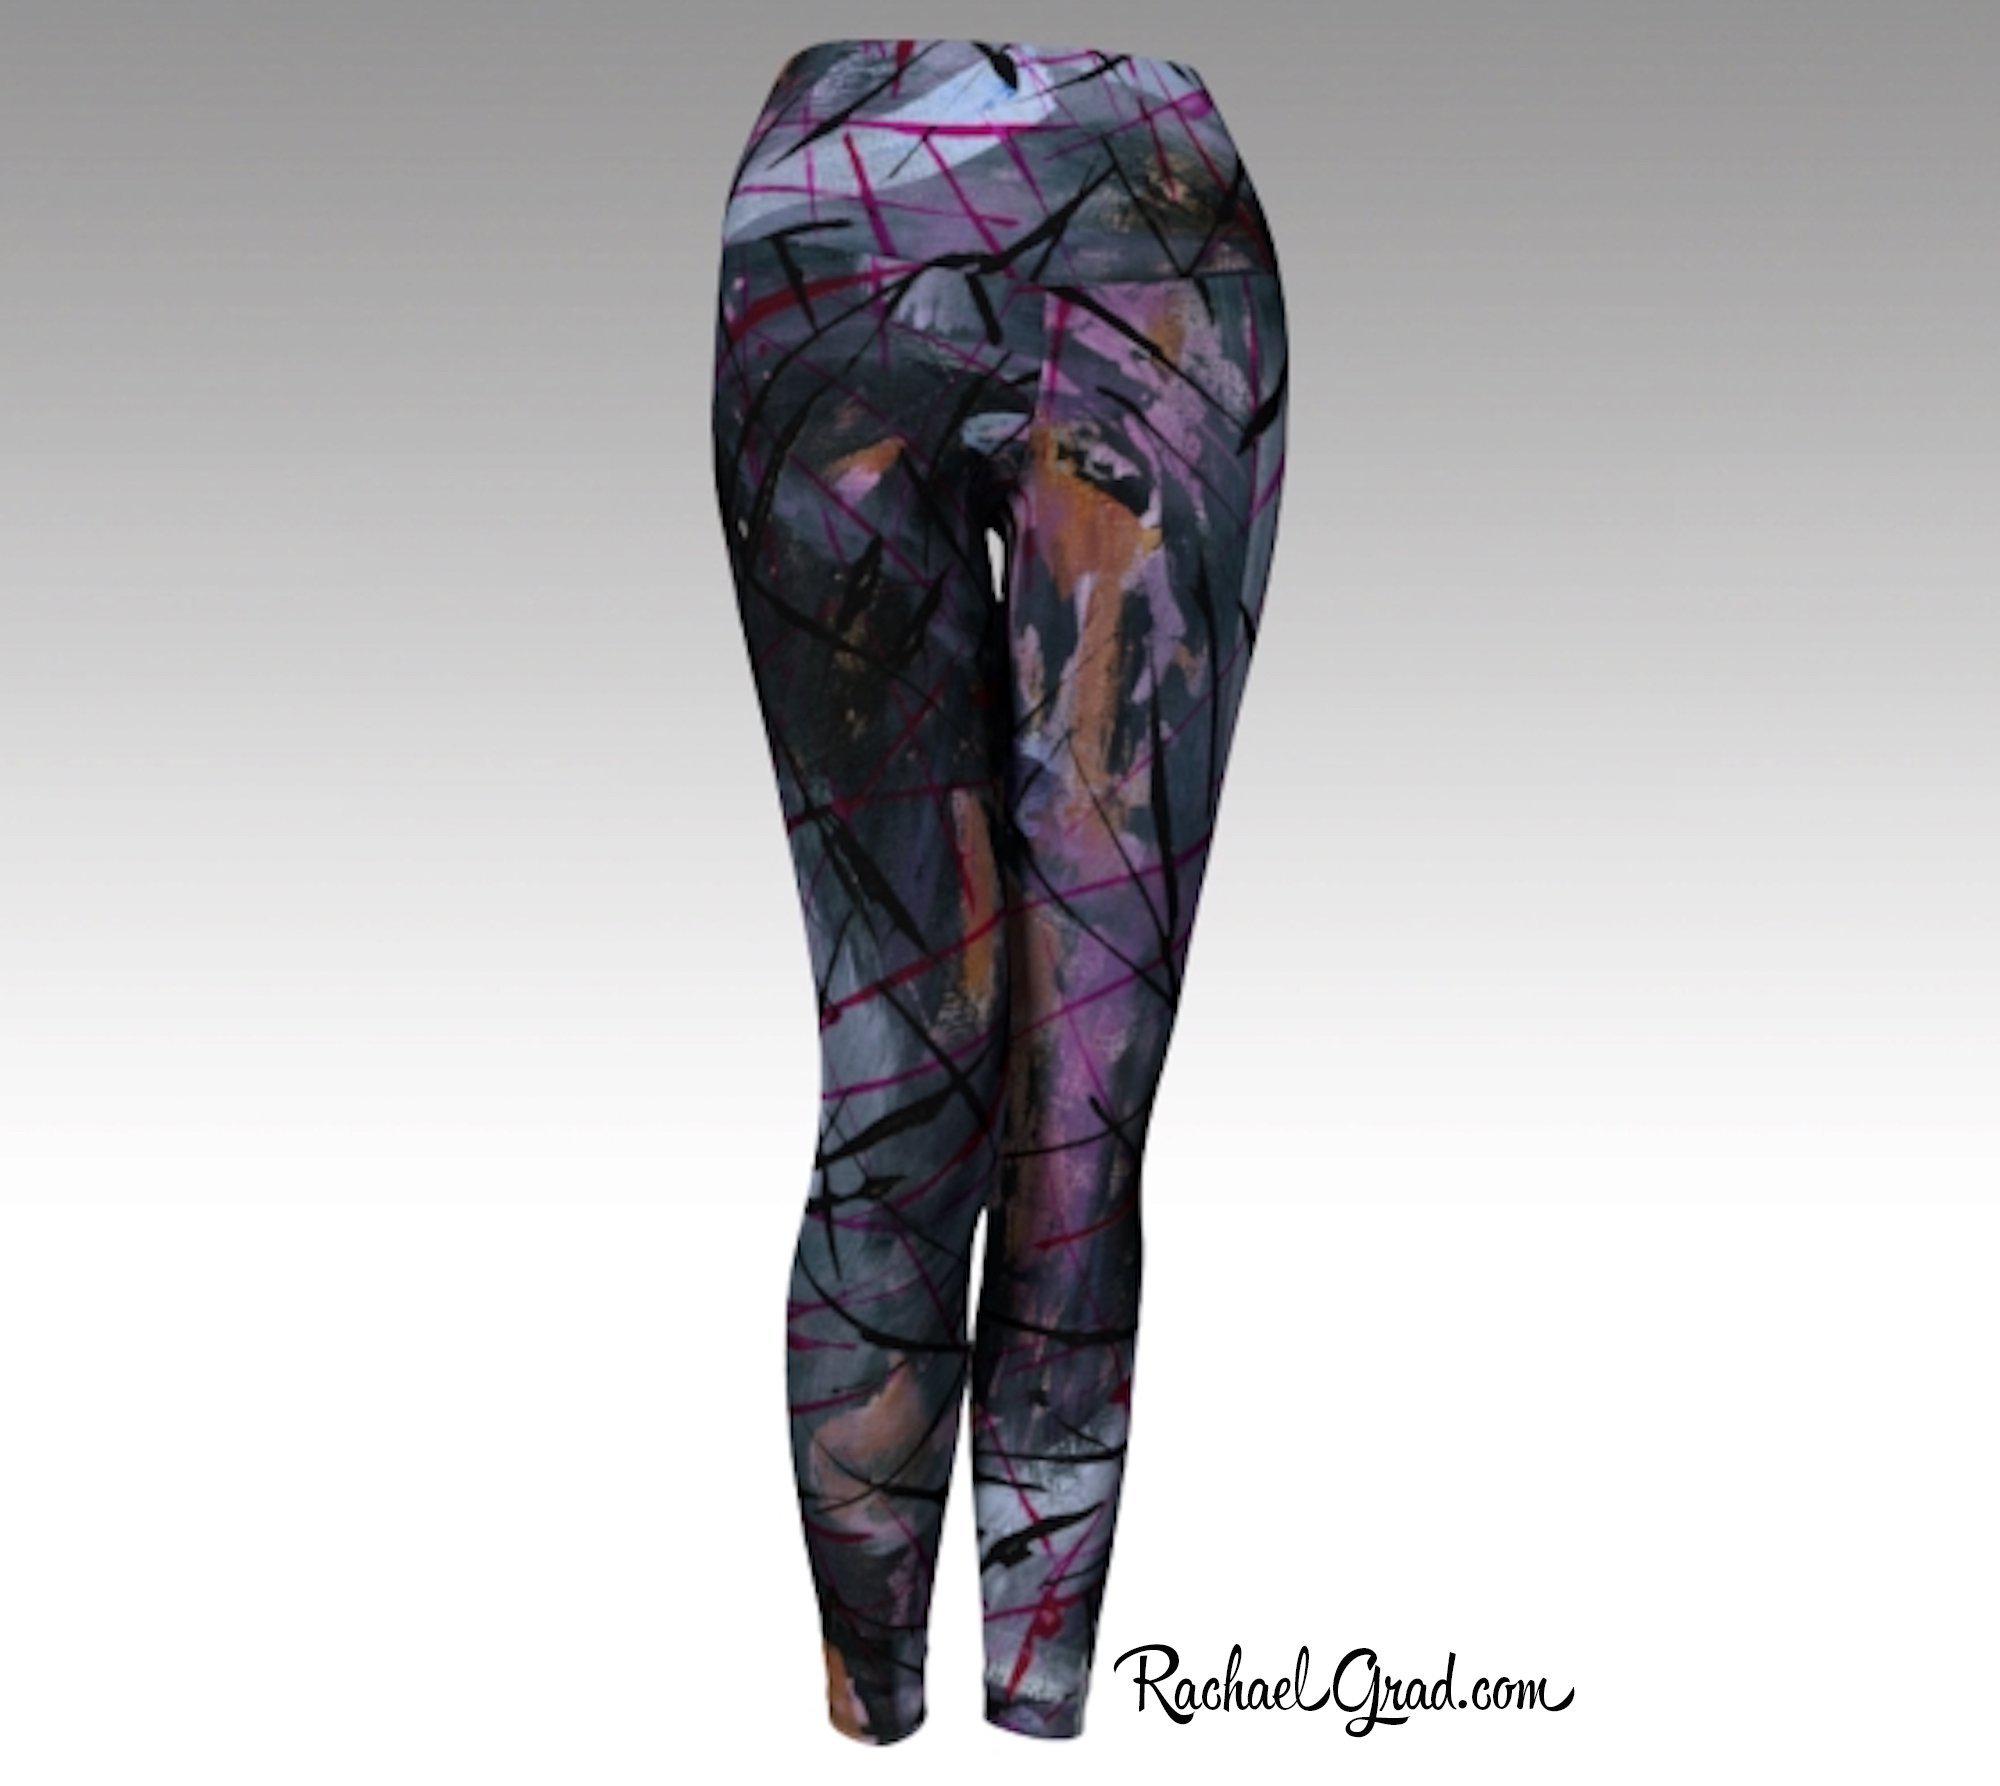 Black Yoga Leggings, Ladies Pants Art by Toronto Artist Rachael Grad